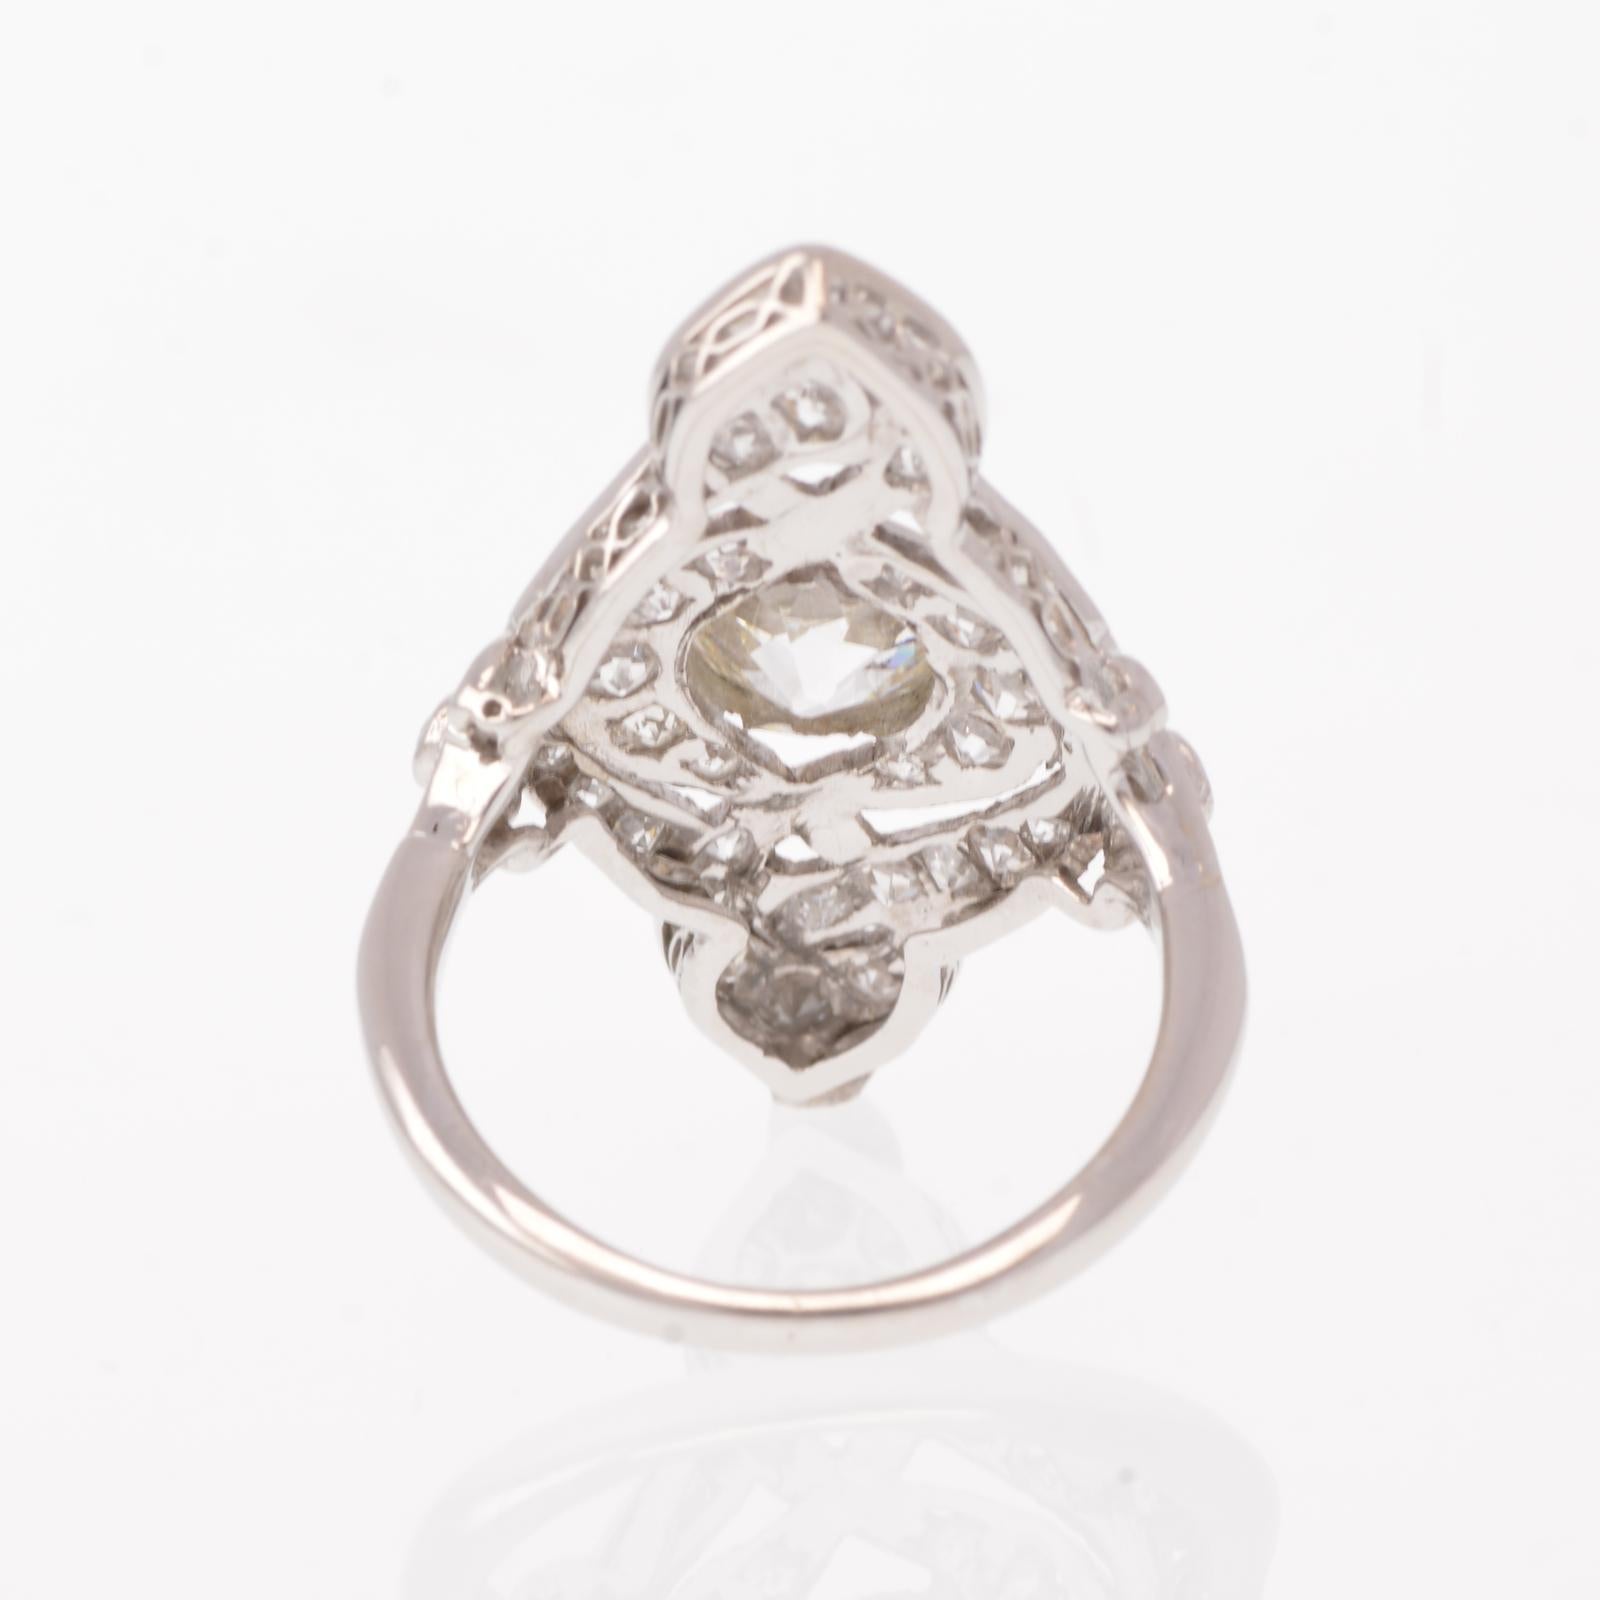 Women's Antique Edwardian Platinum Old Mine Cut .97 Carat Center Diamond Ring